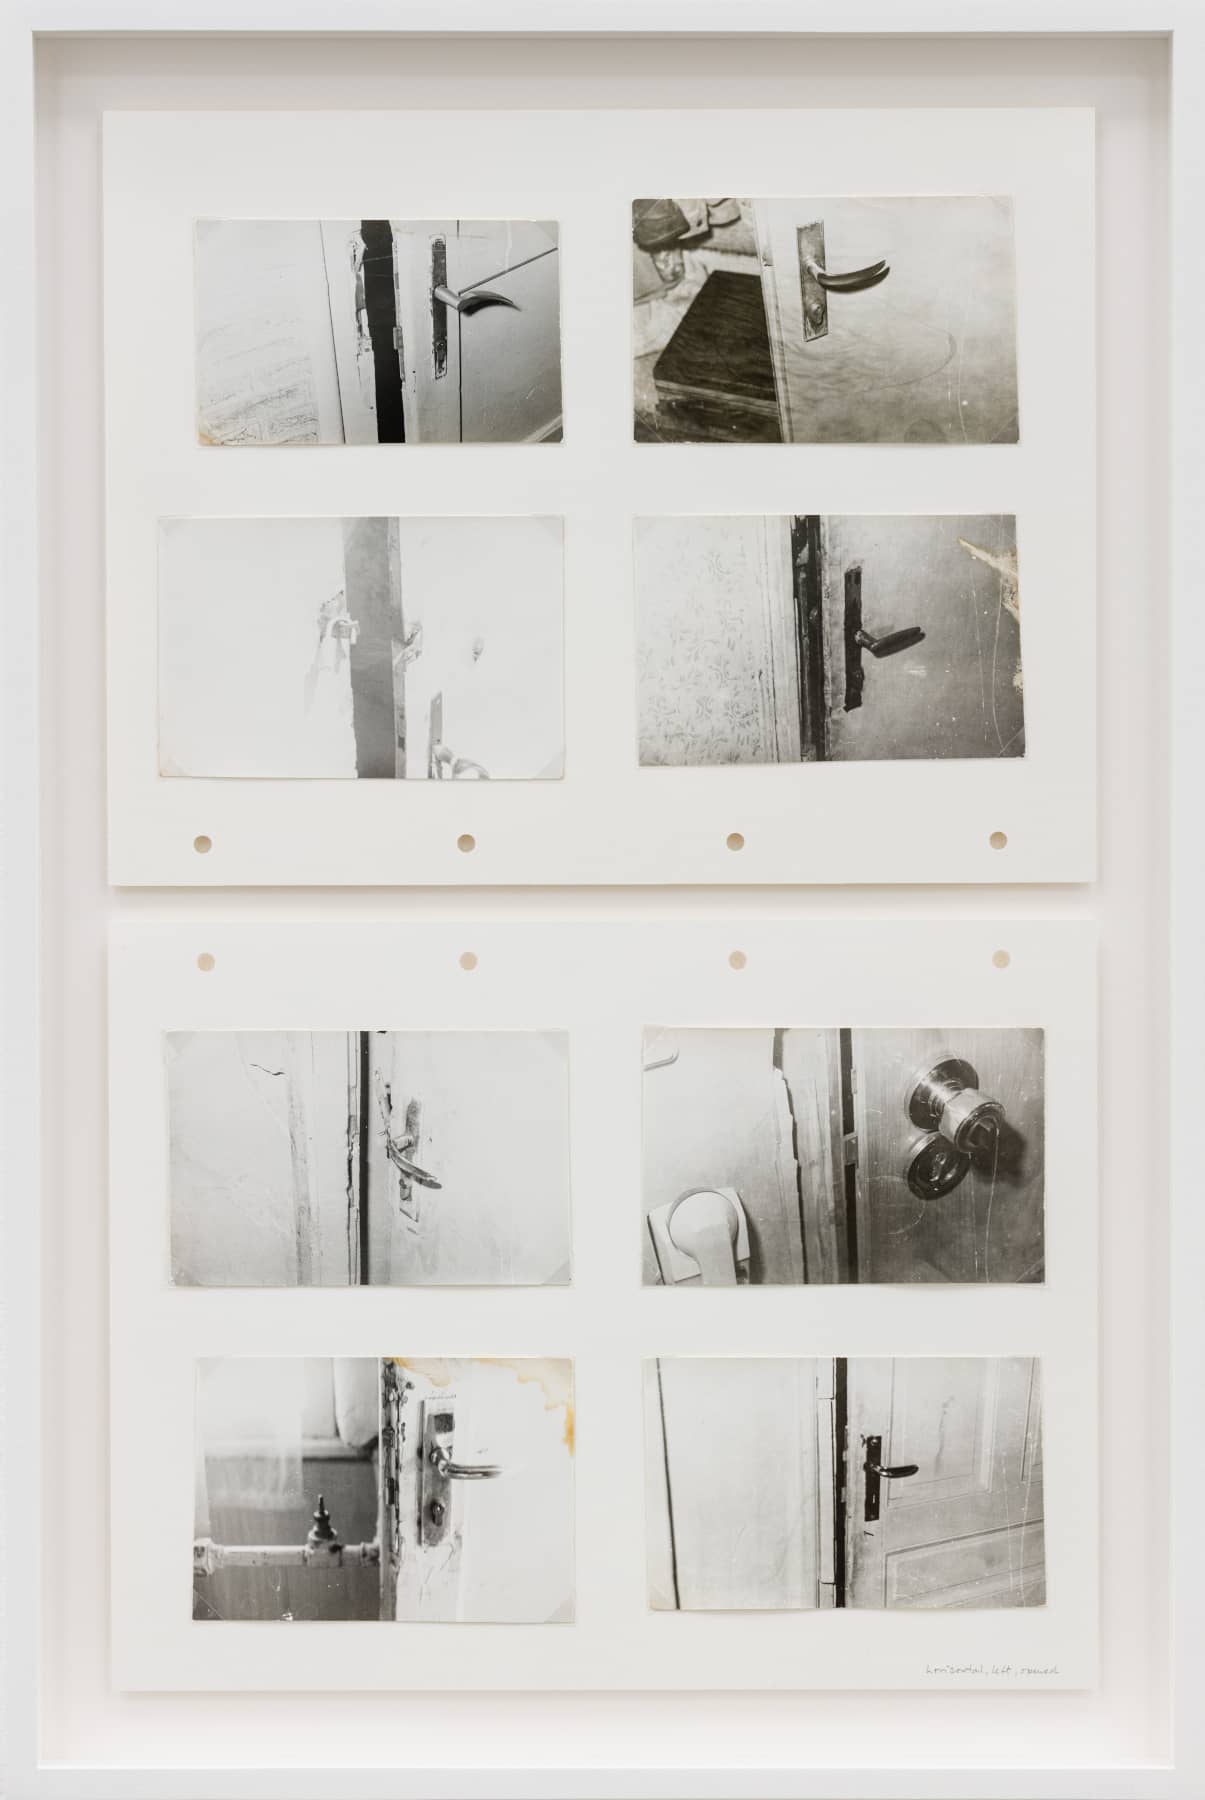 5_jonathan rosic_doors 10_horizontal, left, opened_2022_found photographs_36x53.5cm_shivadas de Schrijver